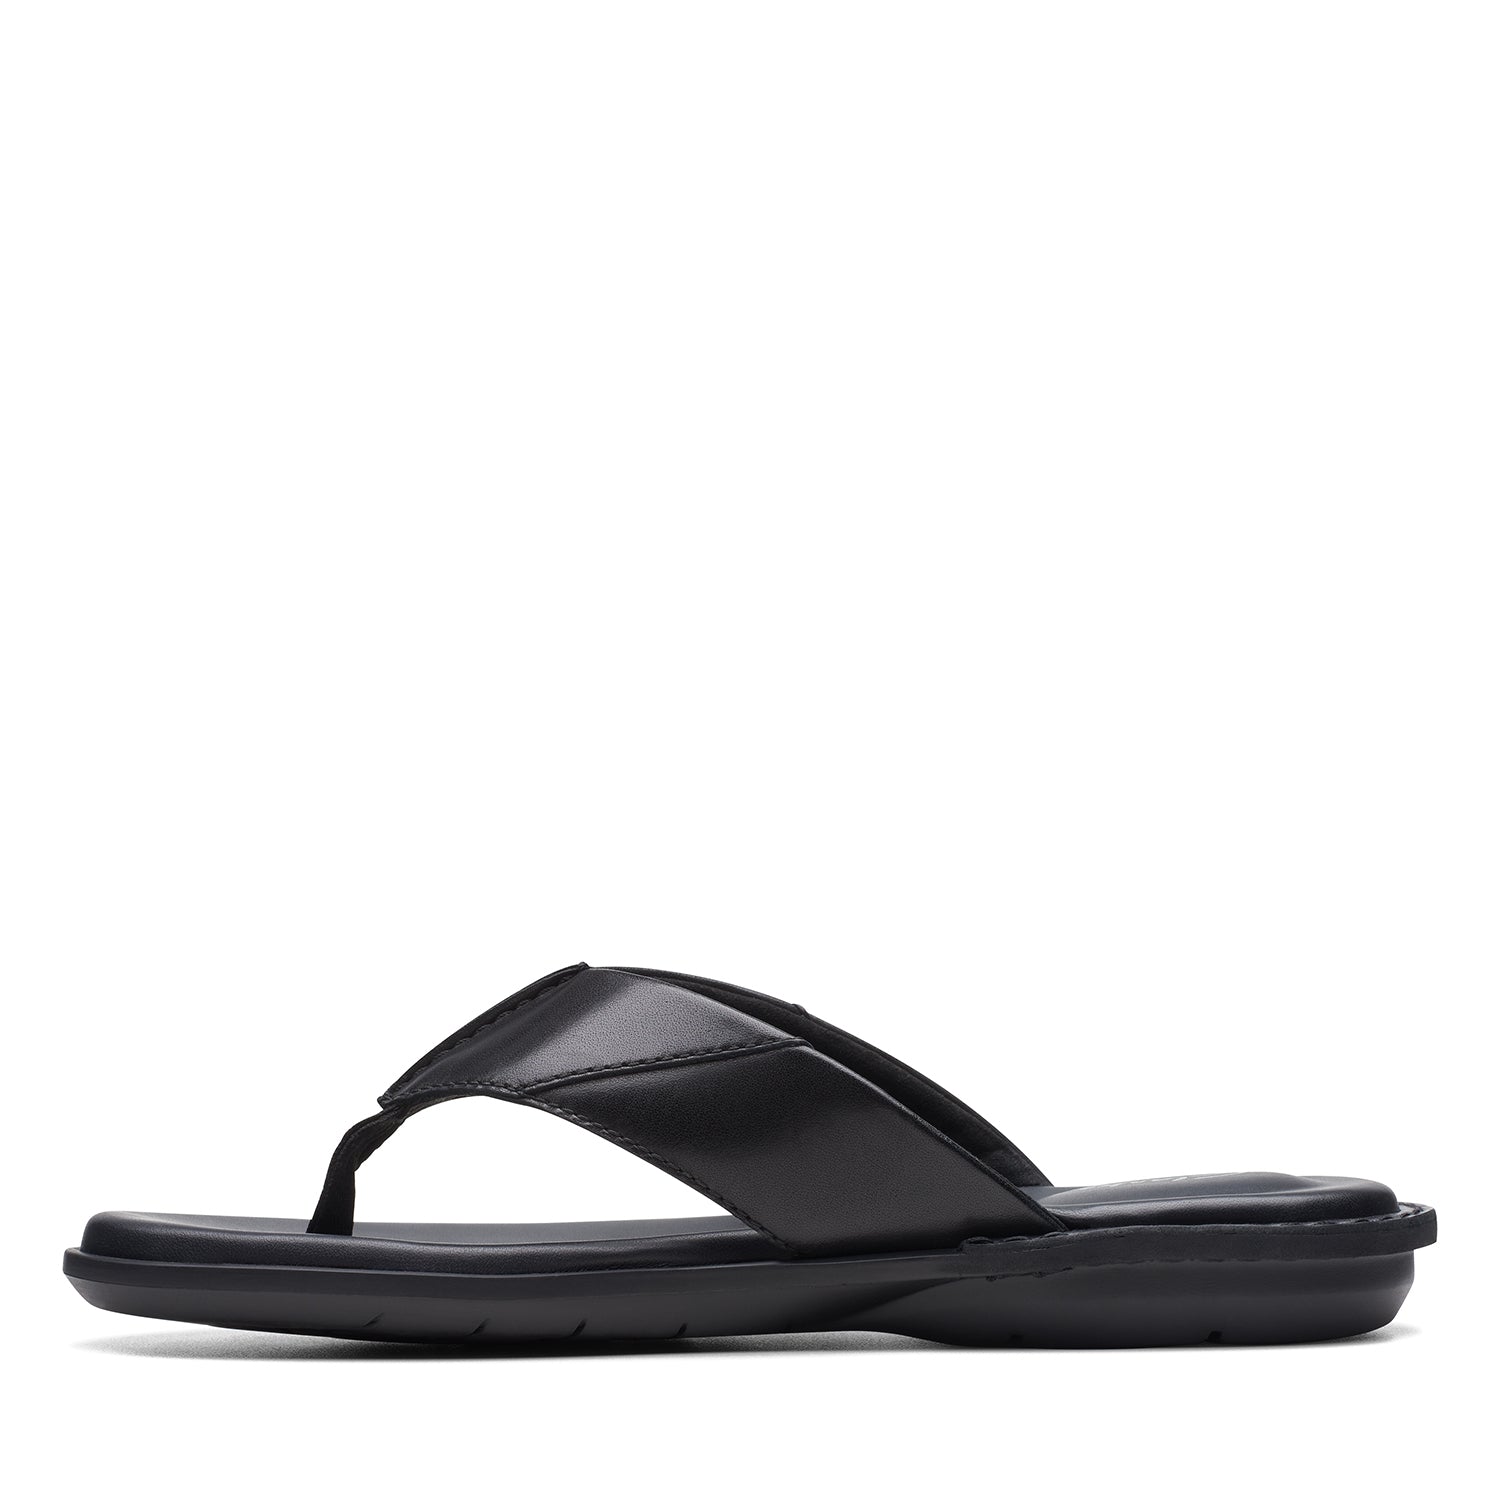 Clarks Penryn Post Sandals - Black Leather - 261745937 - G Width (Standard Fit)